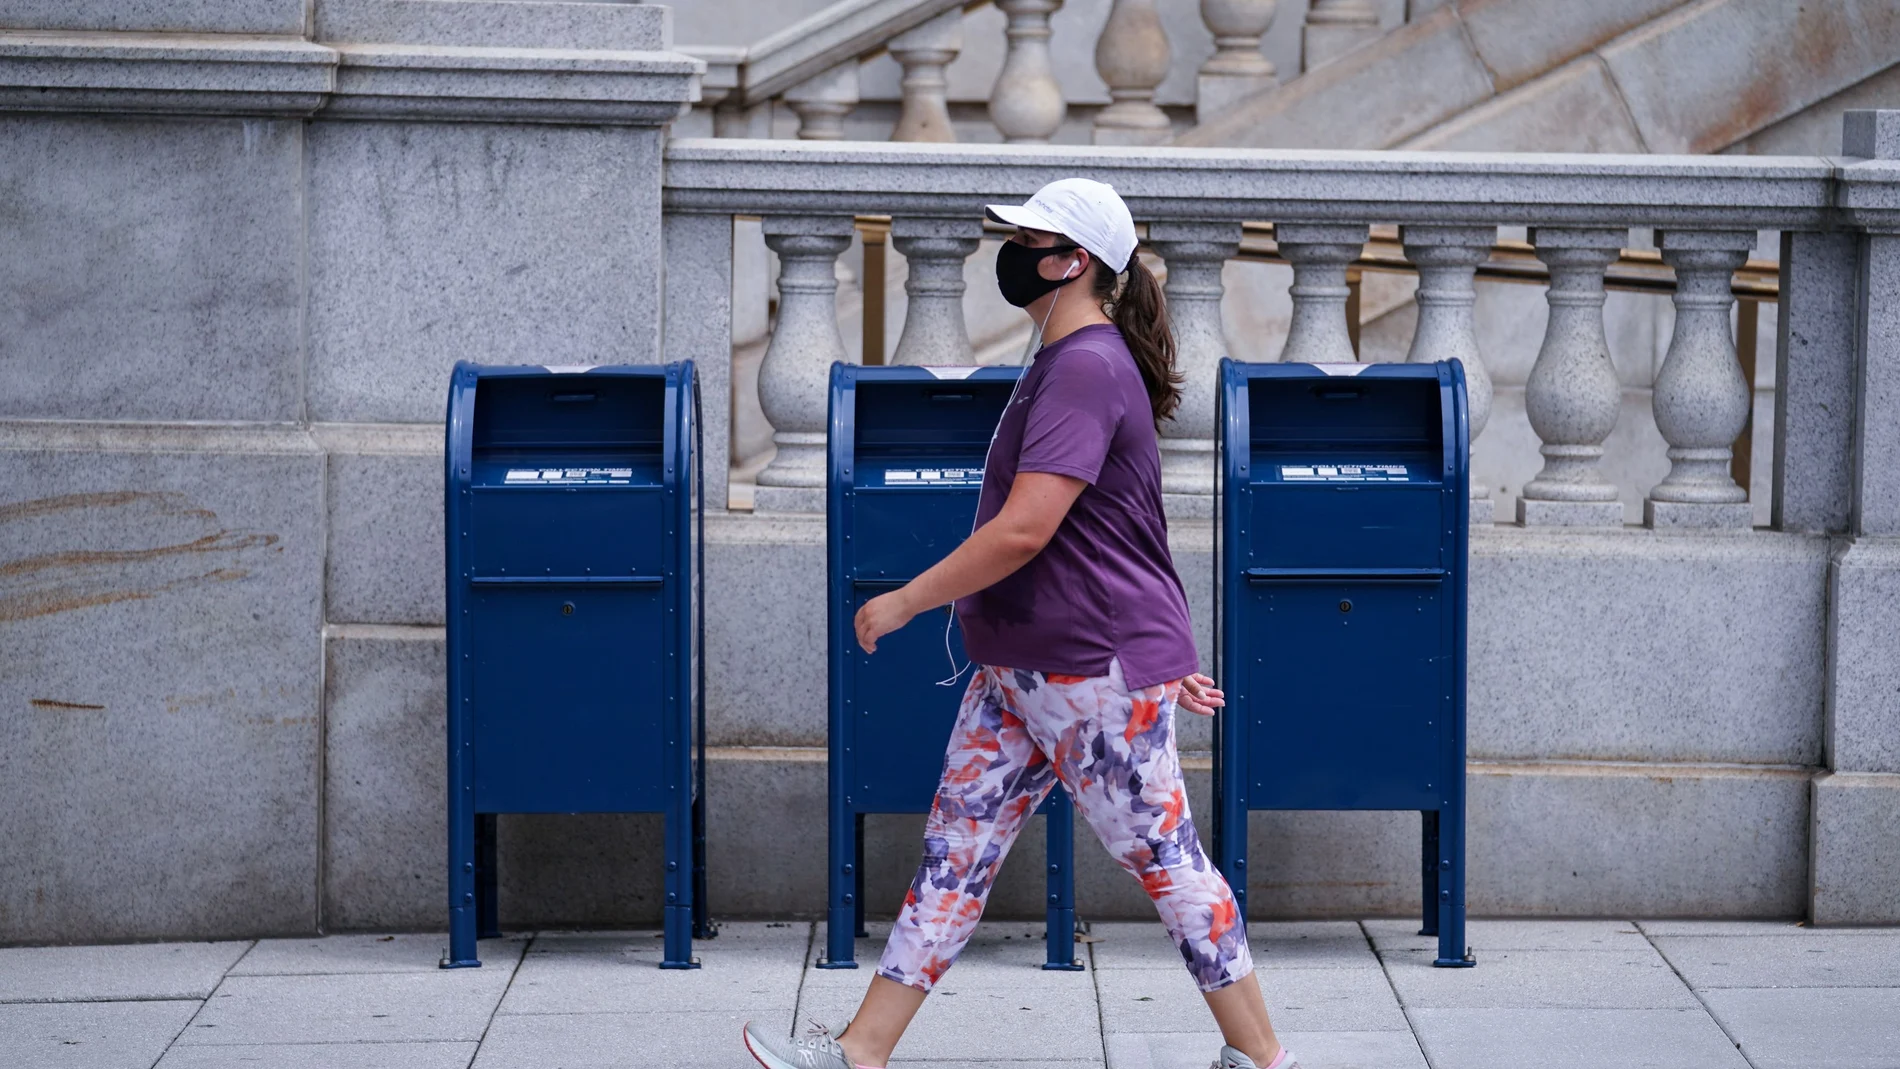 Stimulus Bill Negotiations Stall on Postal Service Funding